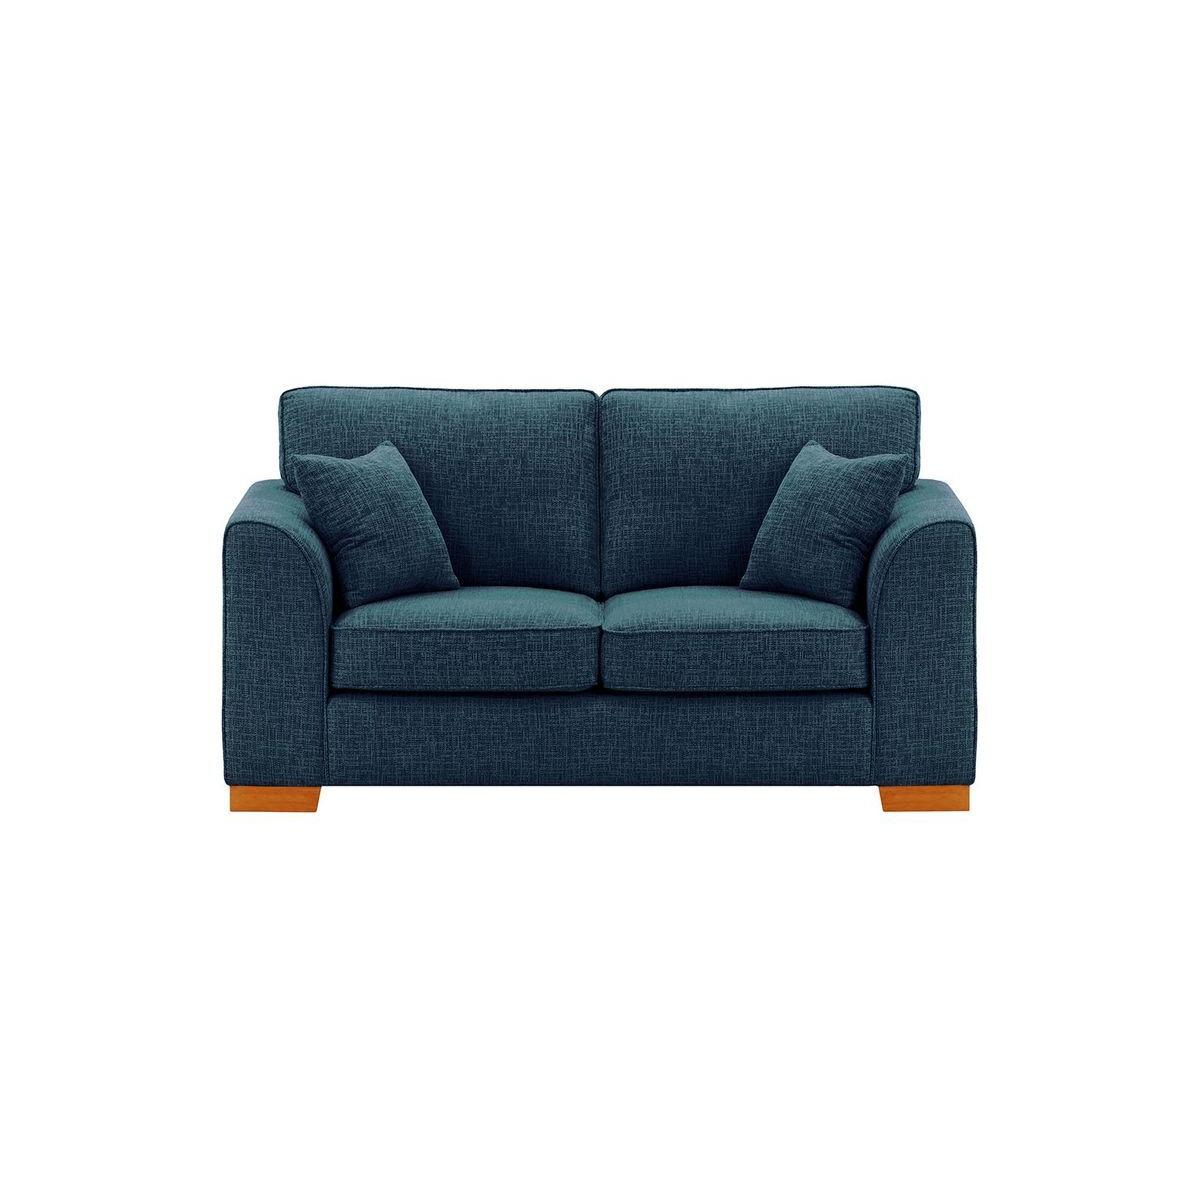 Avos 2 Seater Sofa, teal, Leg colour: aveo - image 1